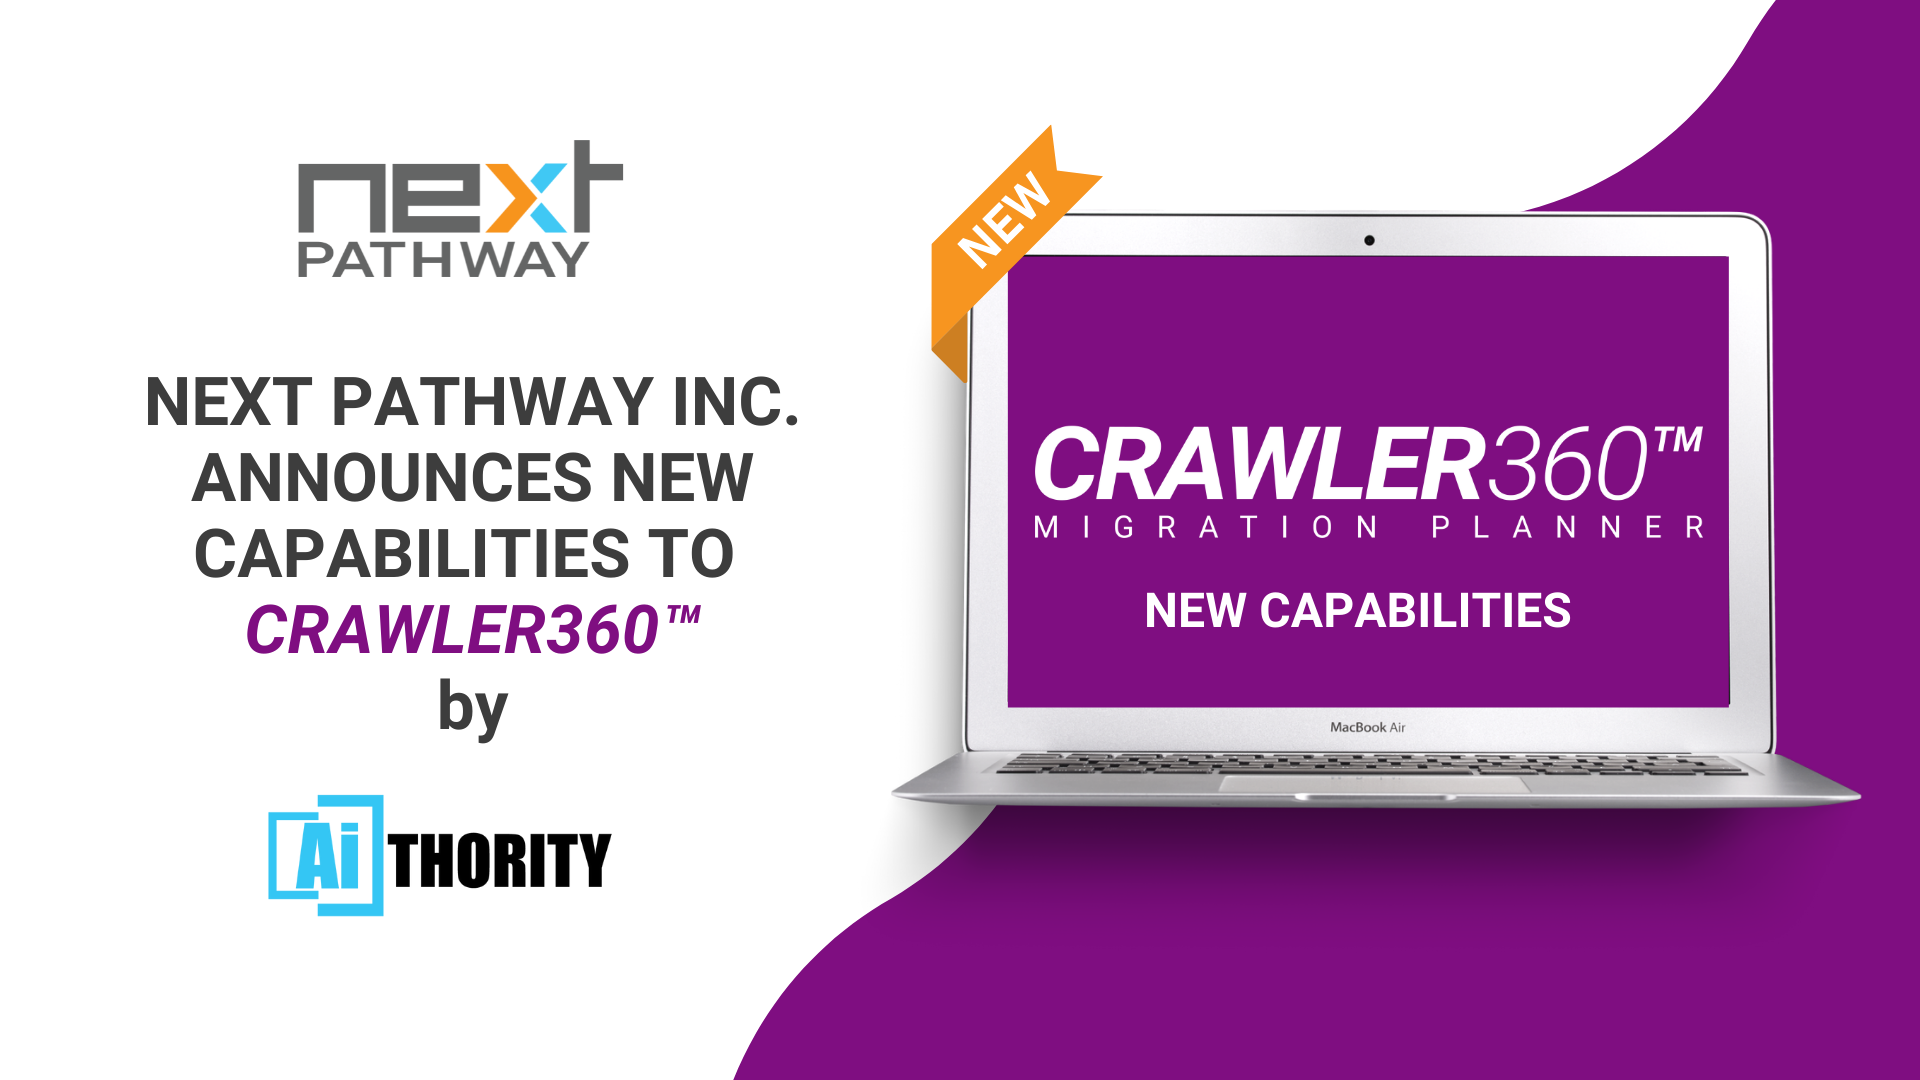 Latest Version of Crawler360 Blog By aithority